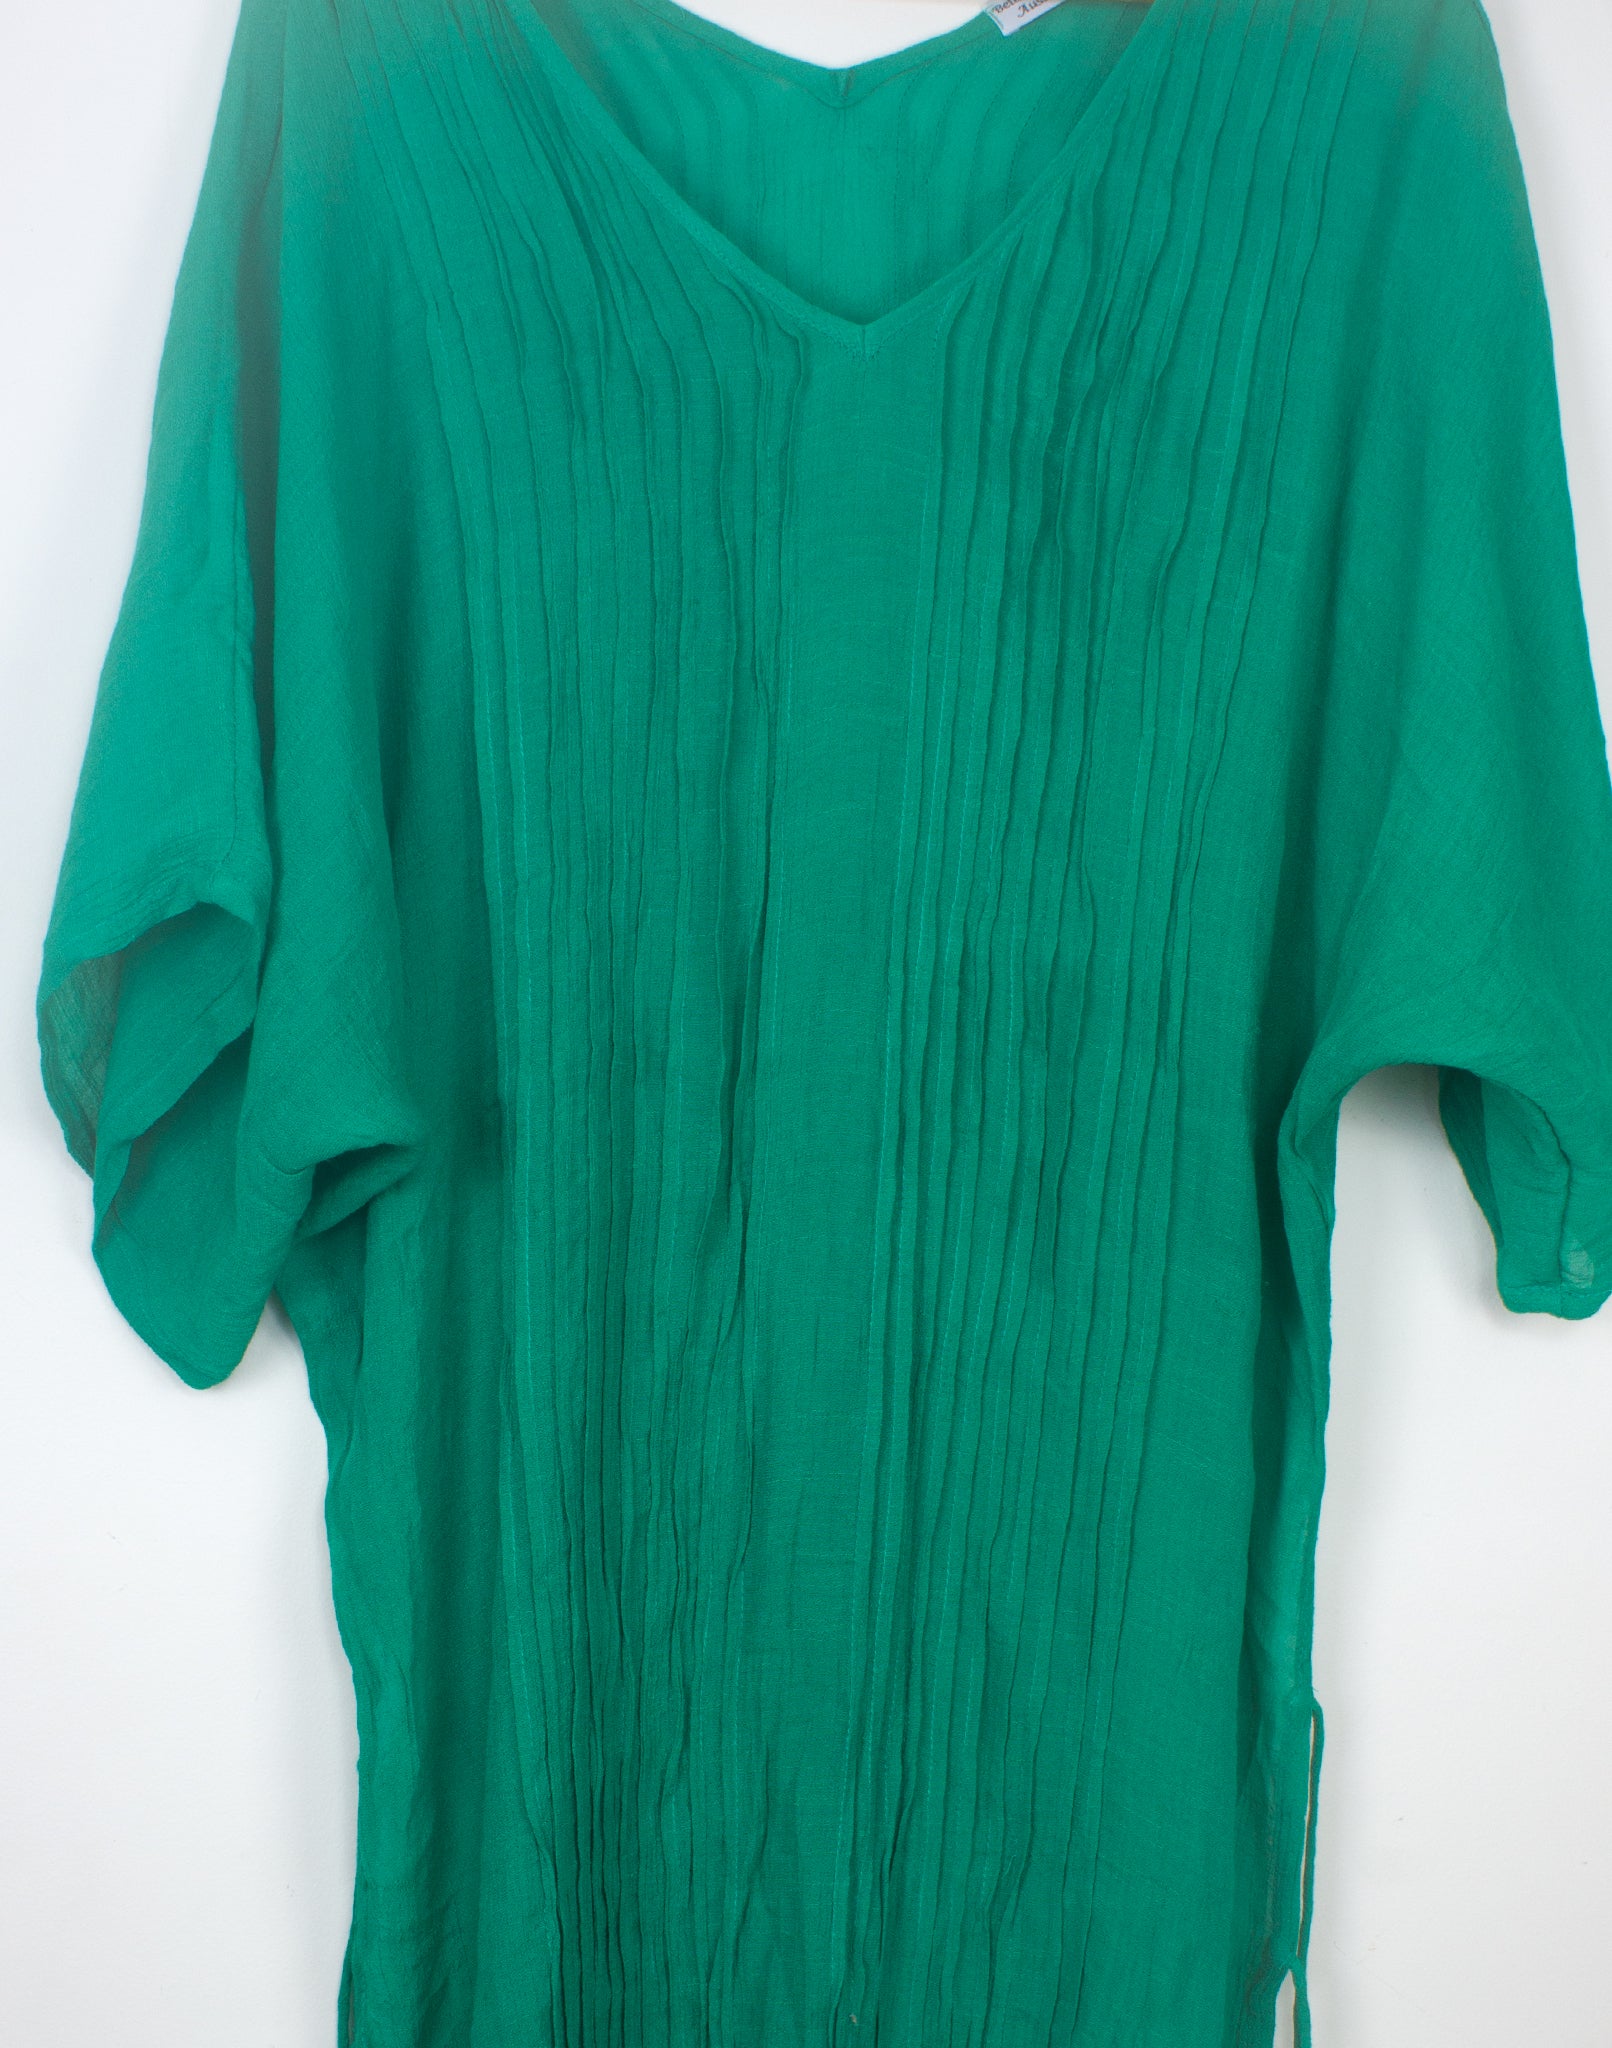 Vintage Green Smock Tunic Dress - Size M/L